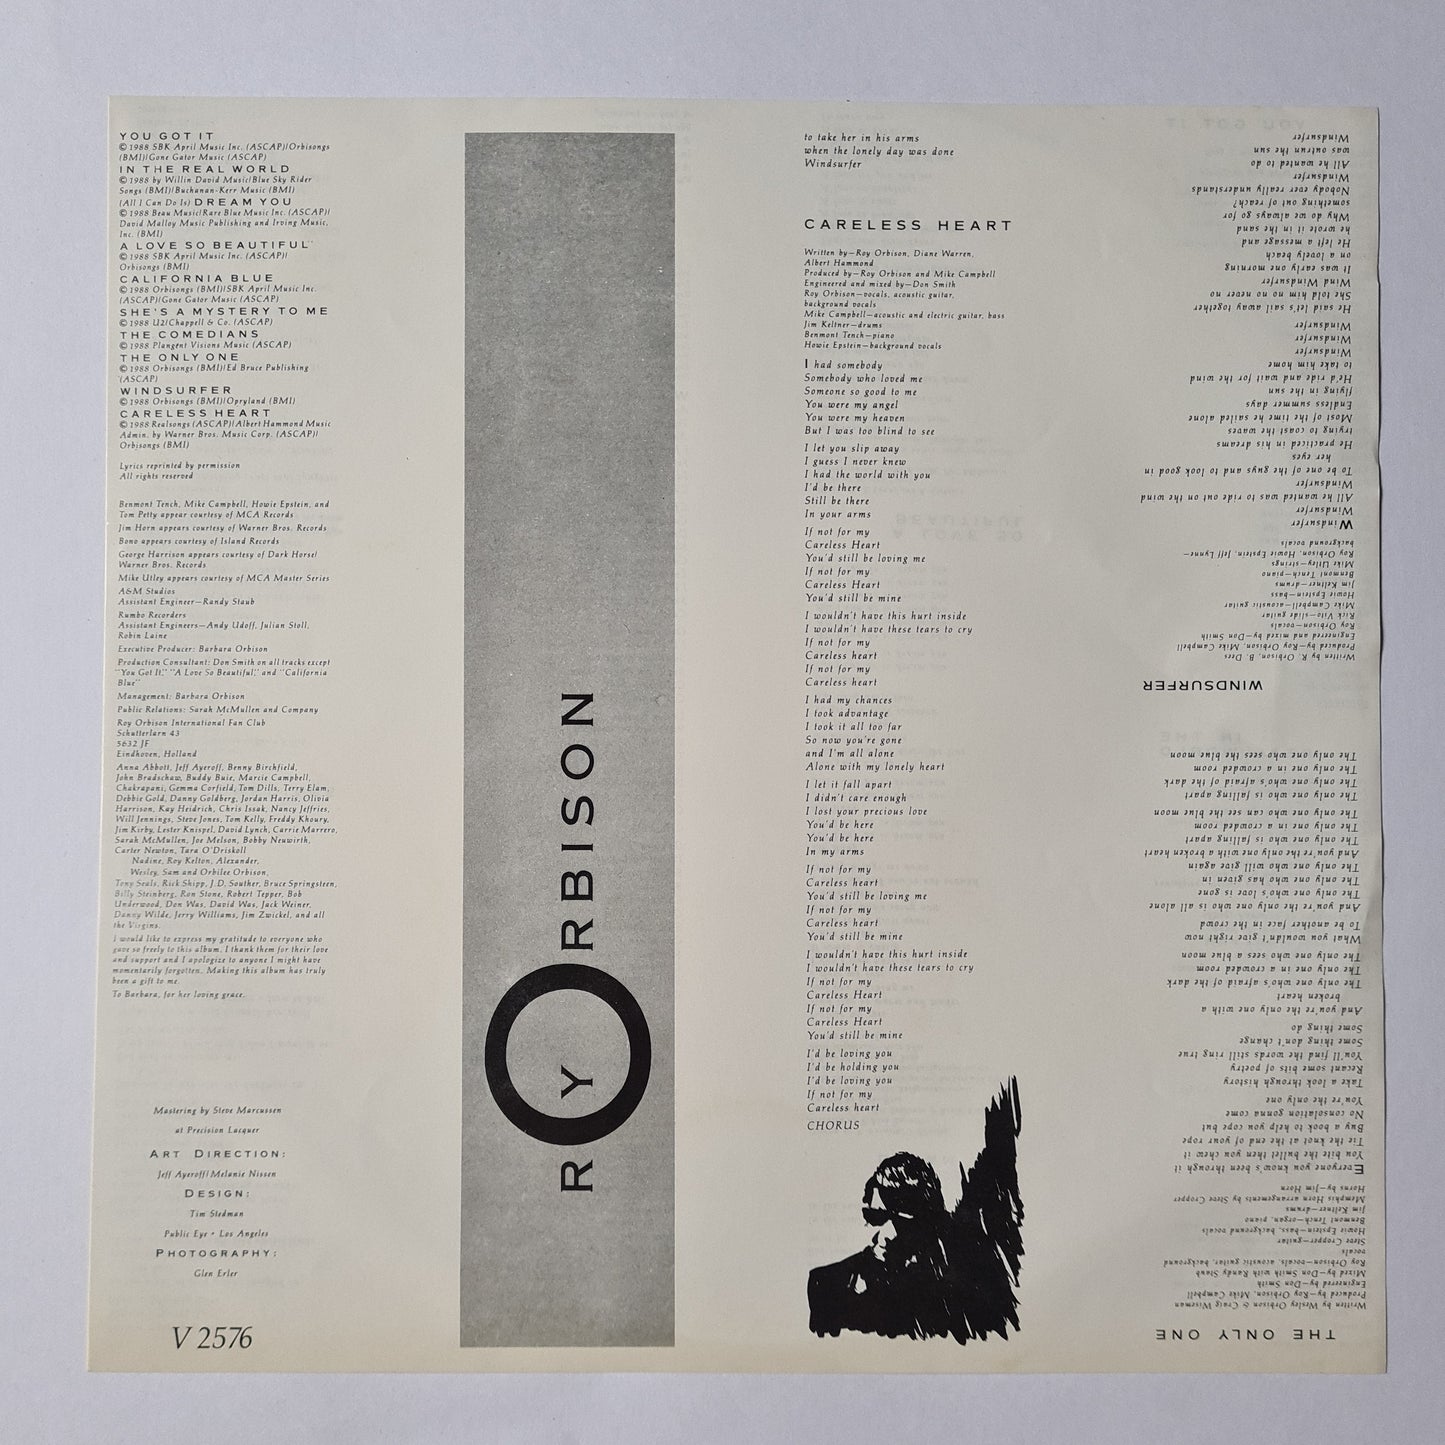 Roy Orbison – Mystery Girl - 1989 (Gatefold) - Vinyl Record